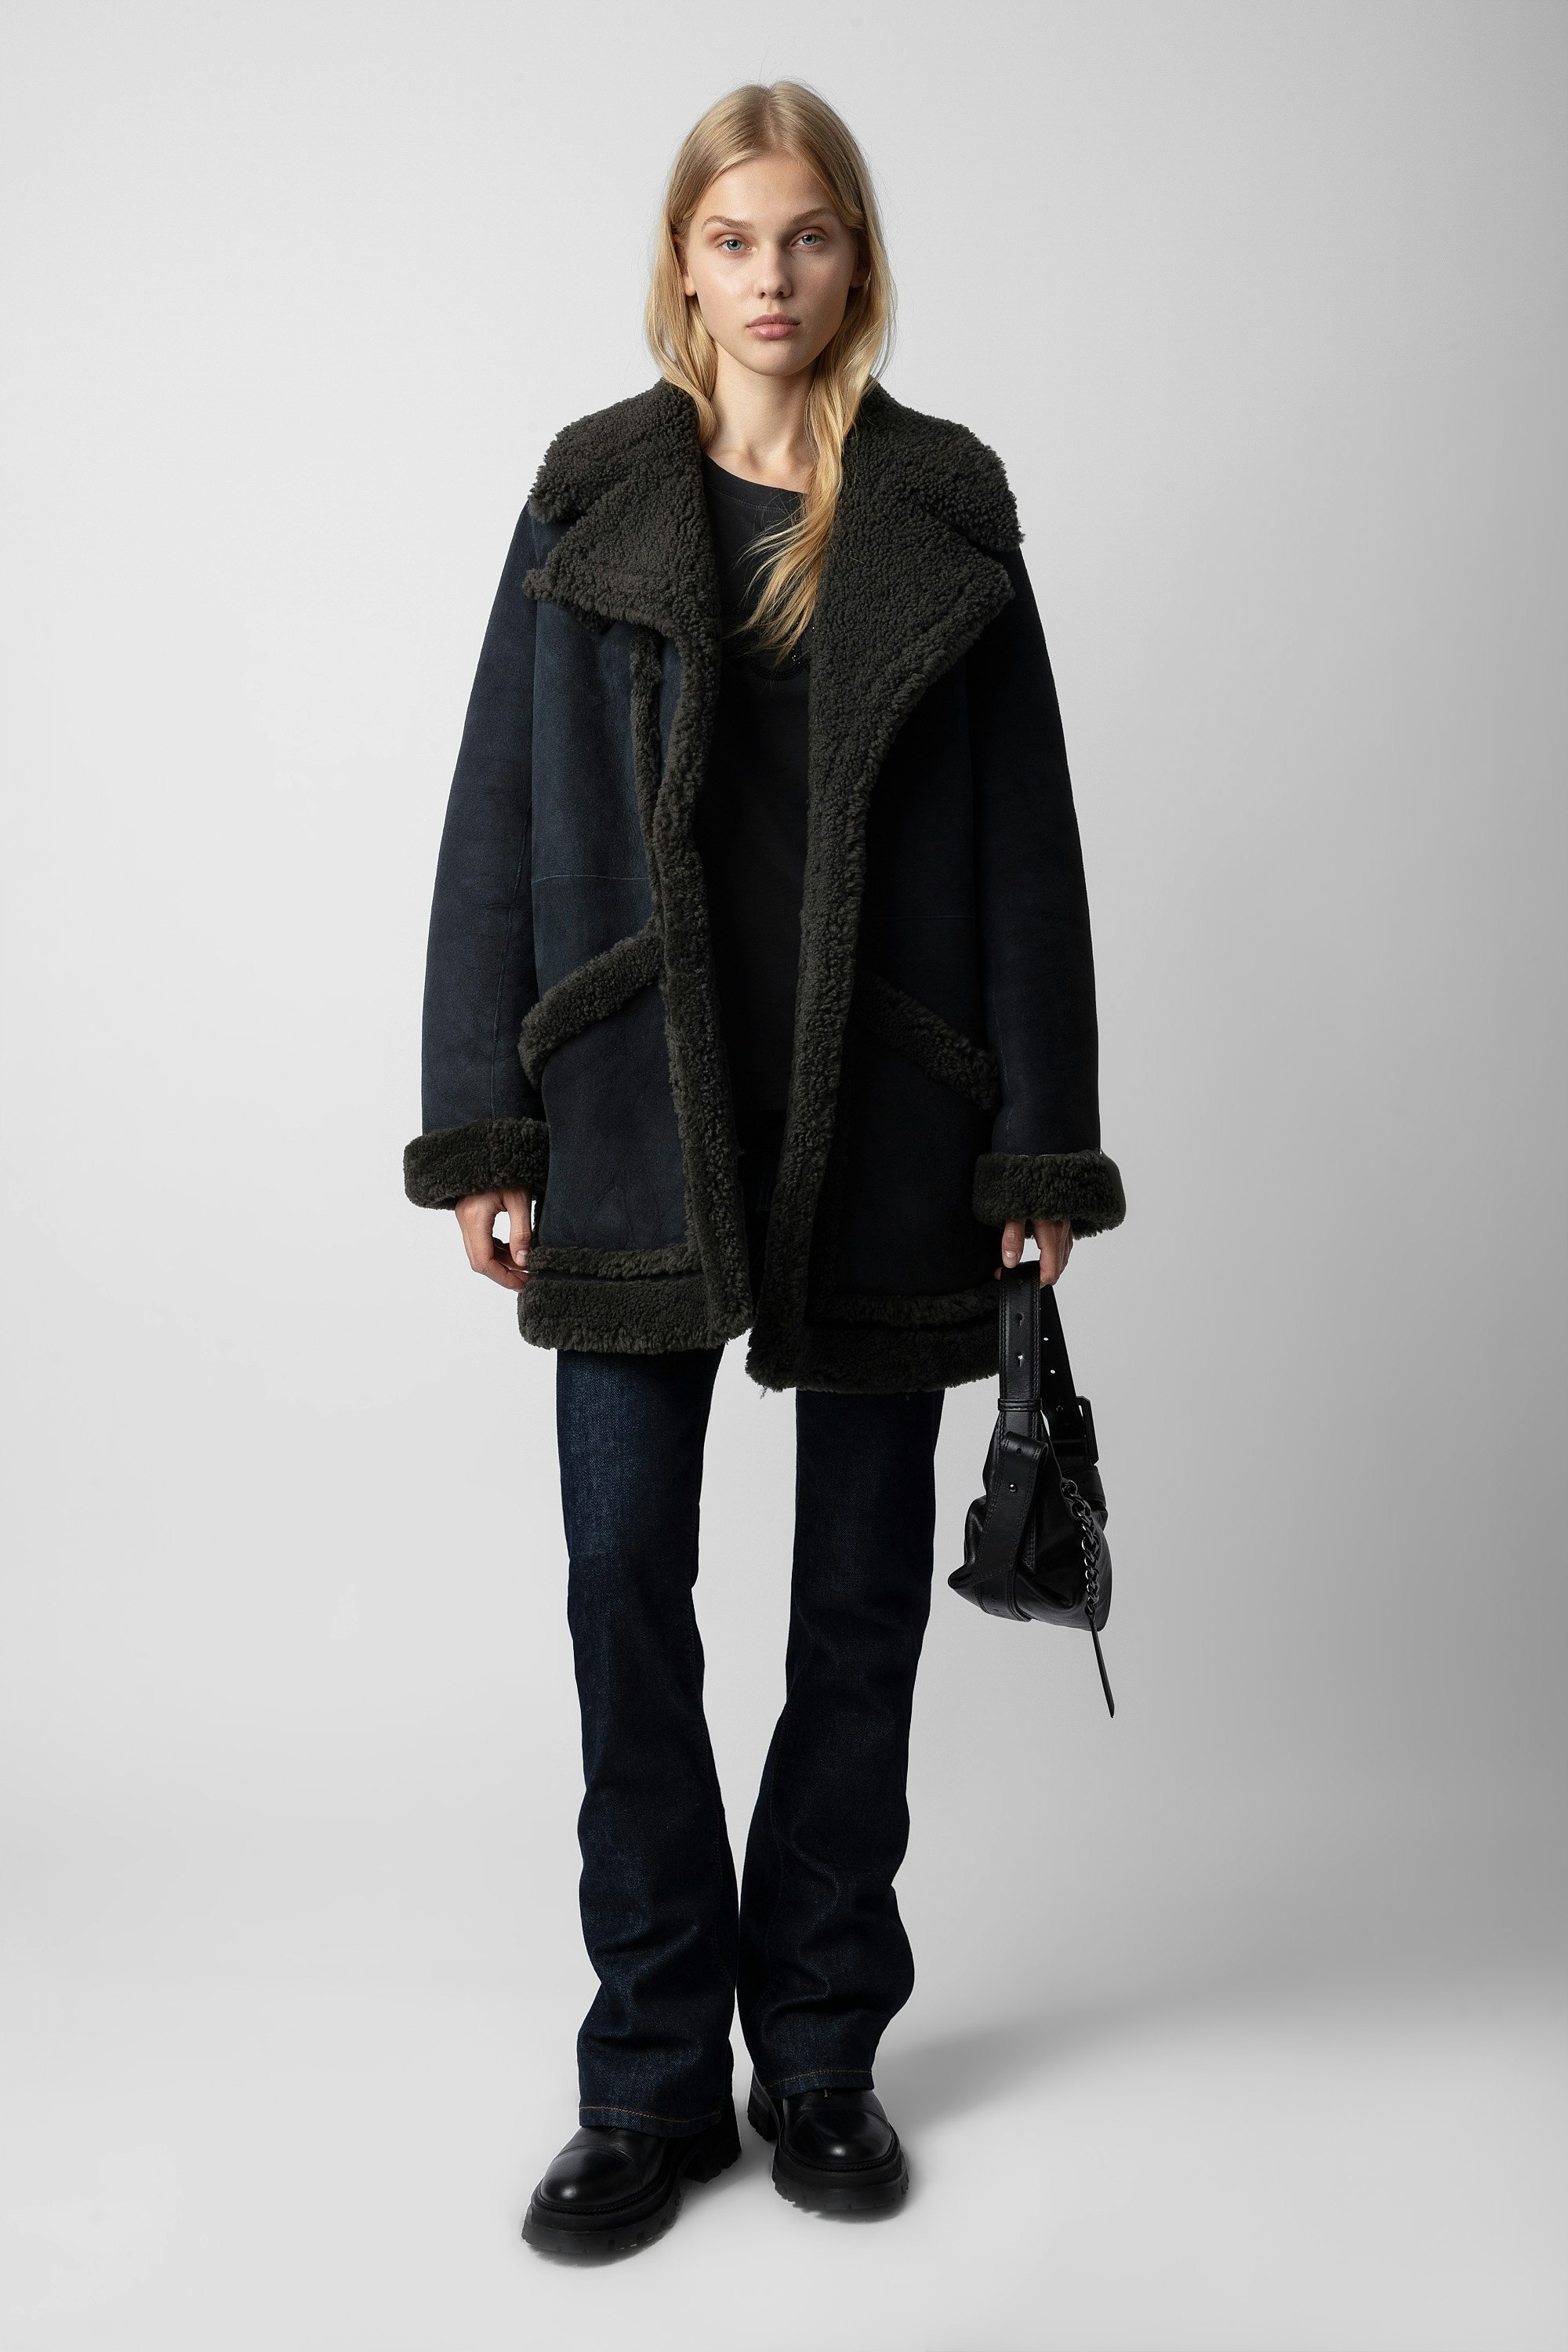 Laury Shearling Coat - Women’s black shearling coat.